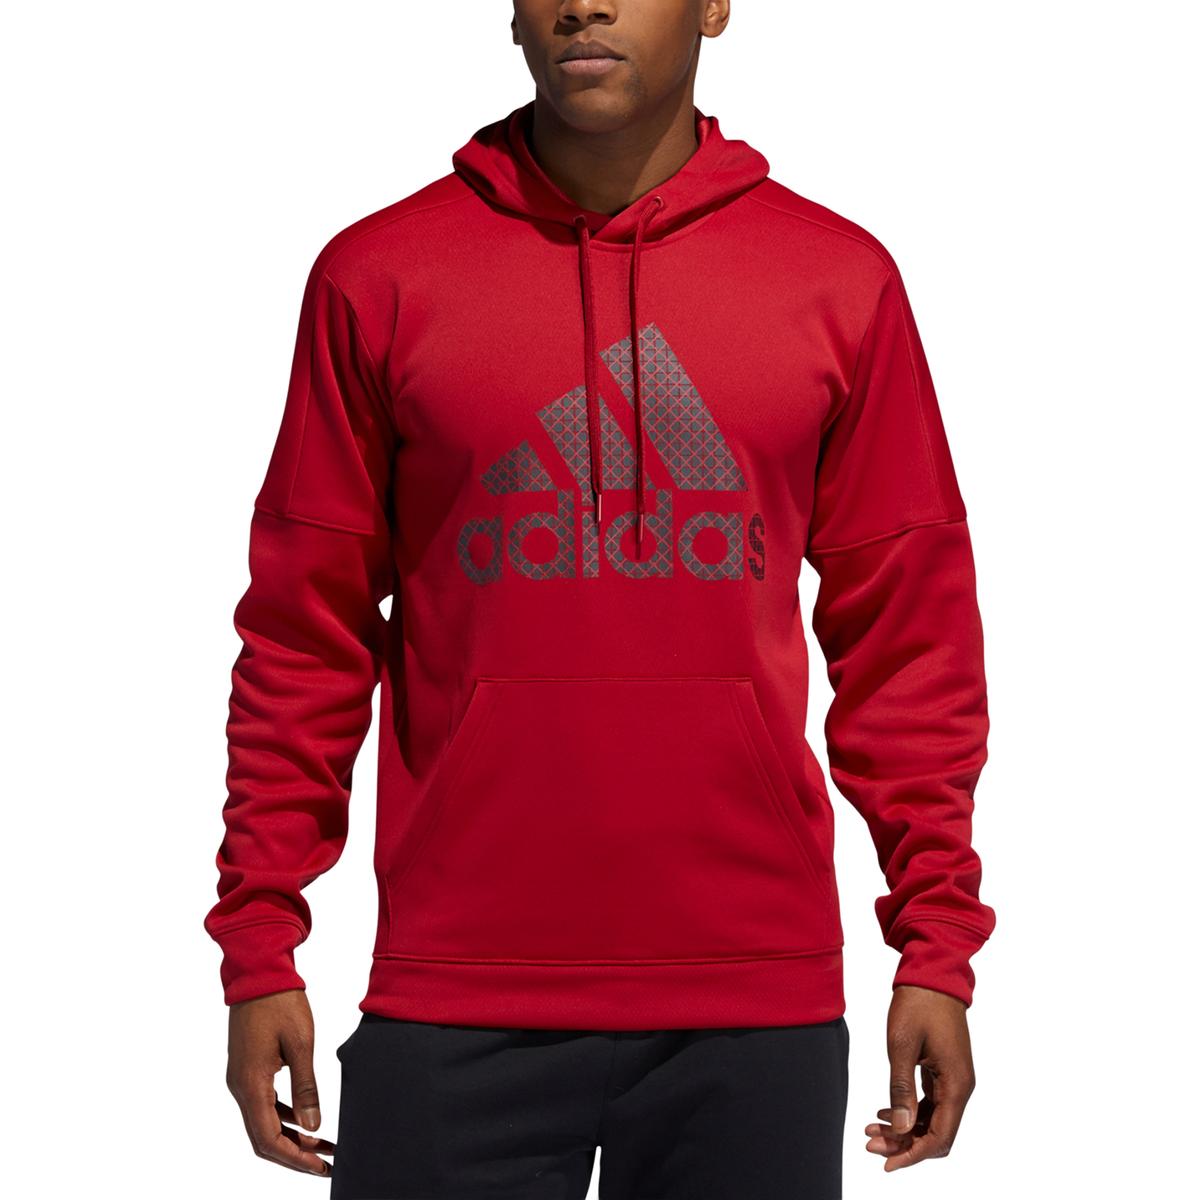 Adidas Mens Red Fleece Logo Hoodie Hooded Sweatshirt XL BHFO 8341 | eBay